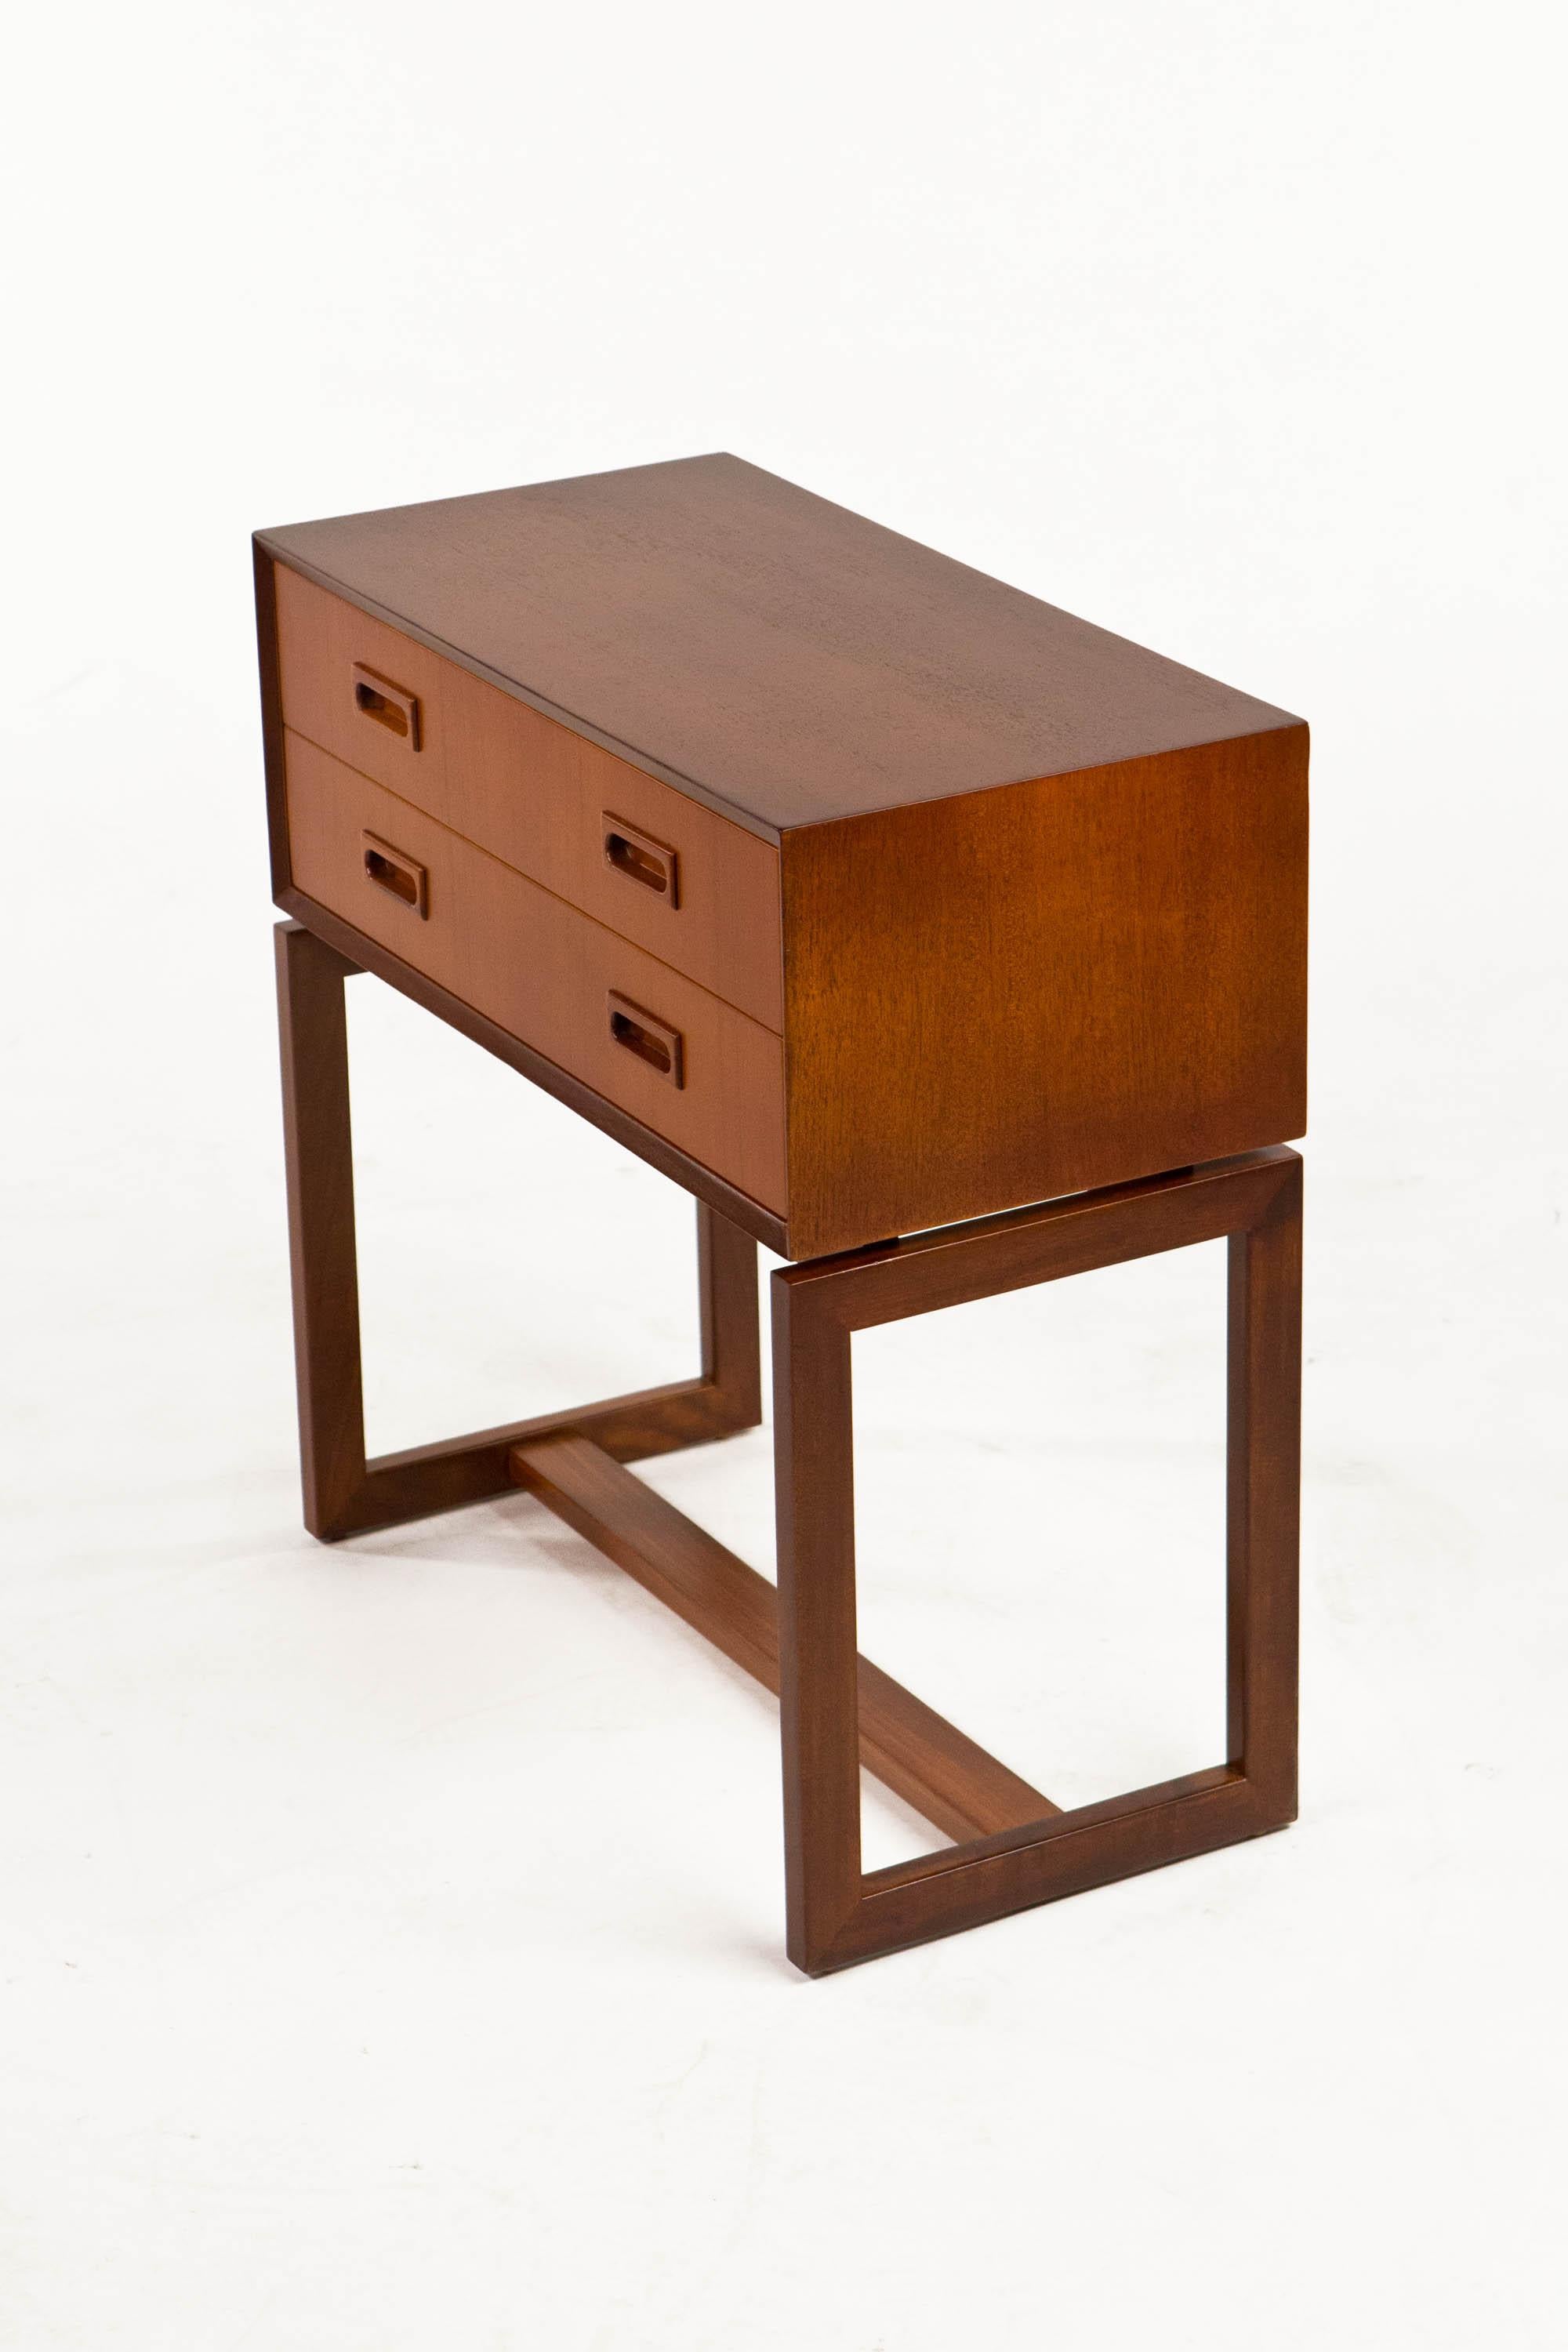 Teak Two Drawer Bureau with Beveled Edge, Danish Design 1950's For Sale 5